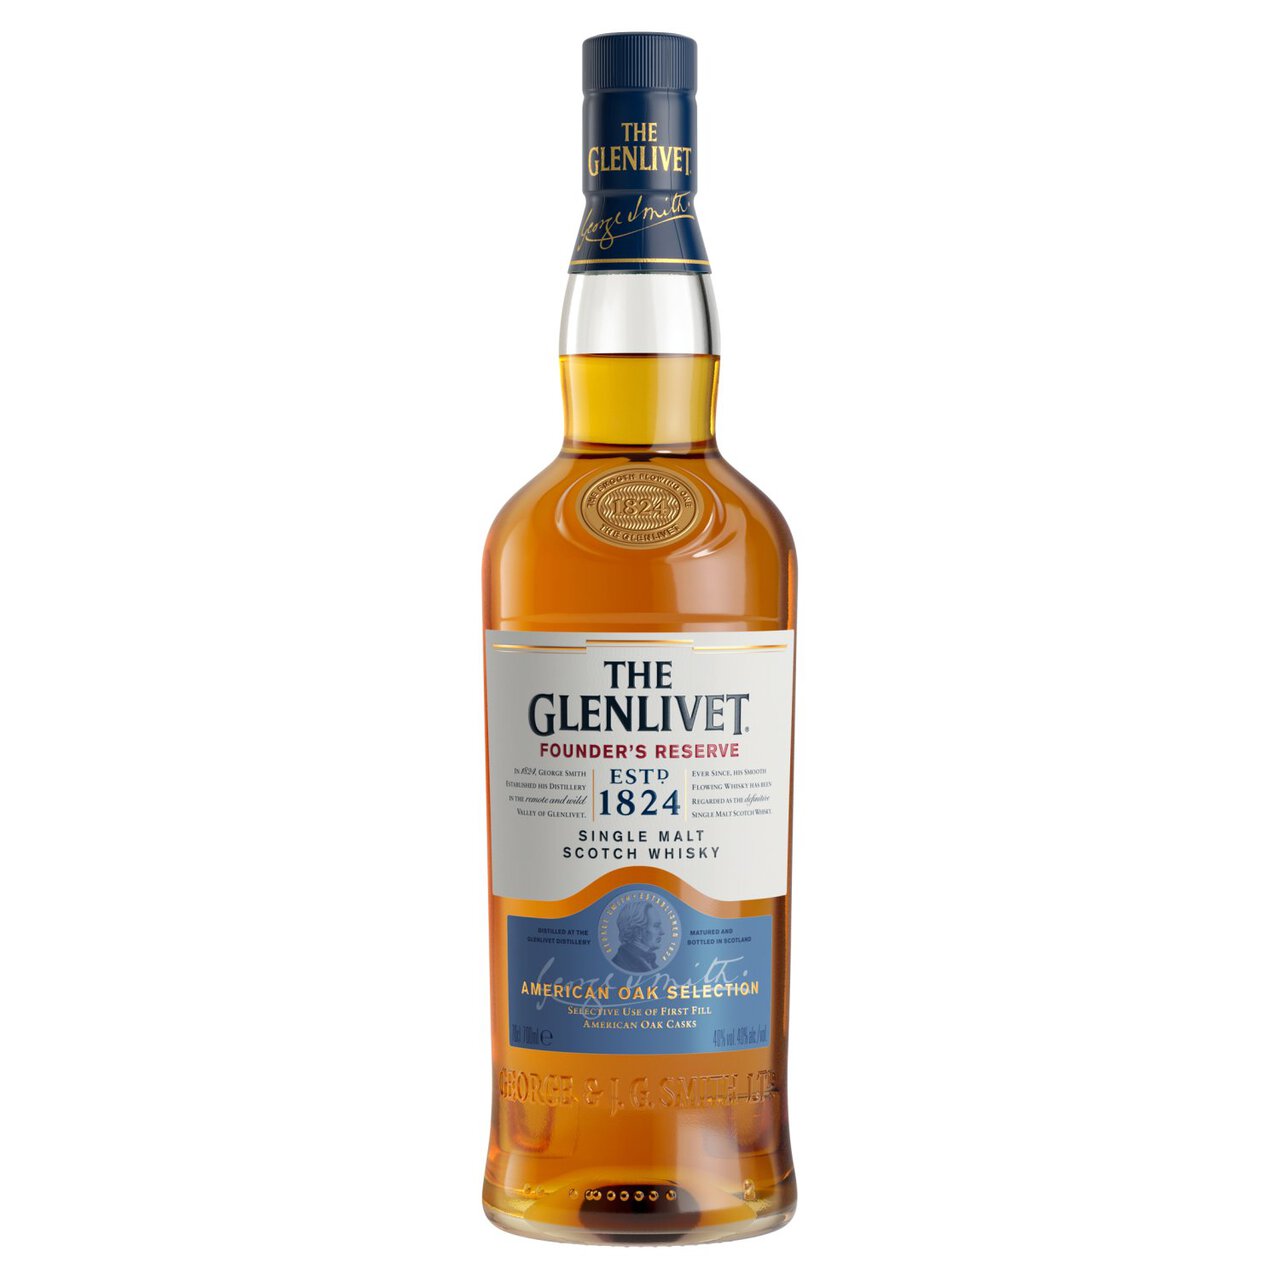 The Glenlivet Founder's Reserve Single Malt Scotch Whisky 70cl